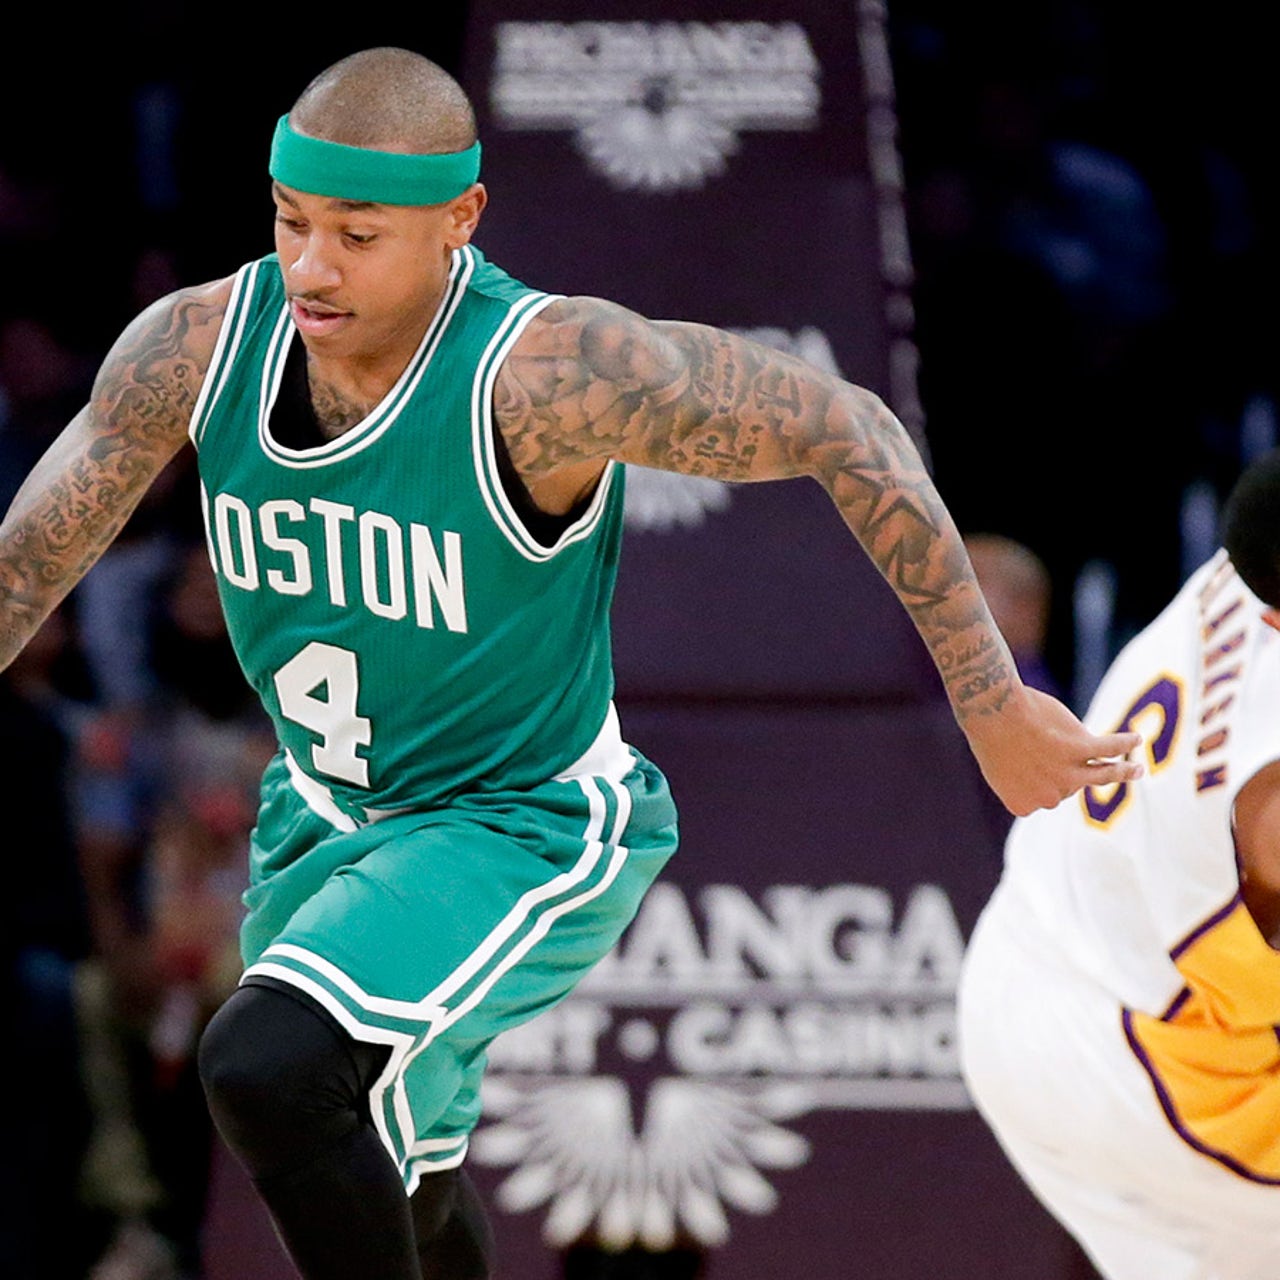 Isaiah Thomas Embracing Role As Franchise Cornerstone For Boston Celtics